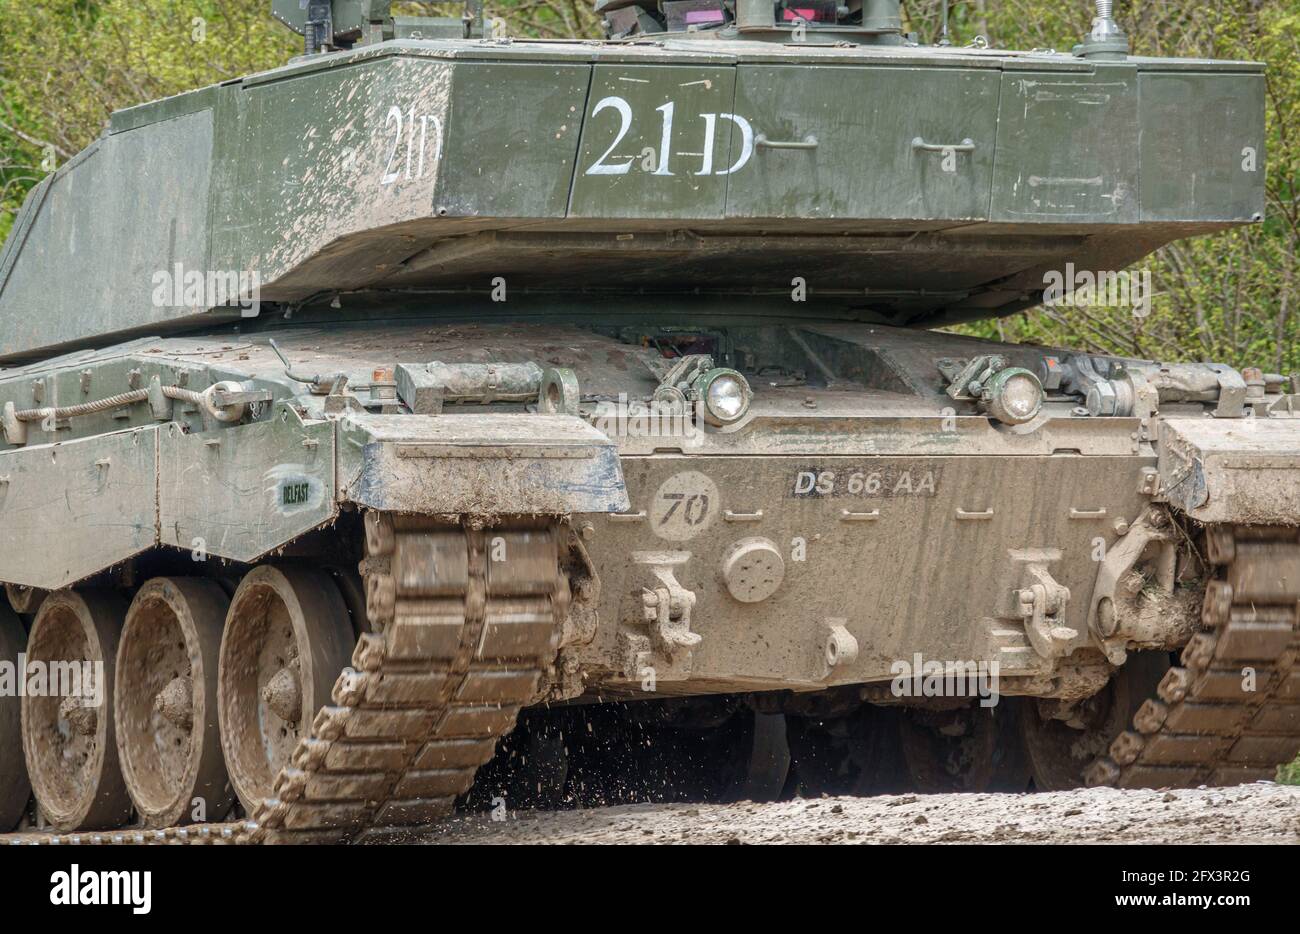 Challenger 3 Main Battle Tank (MBT), UK